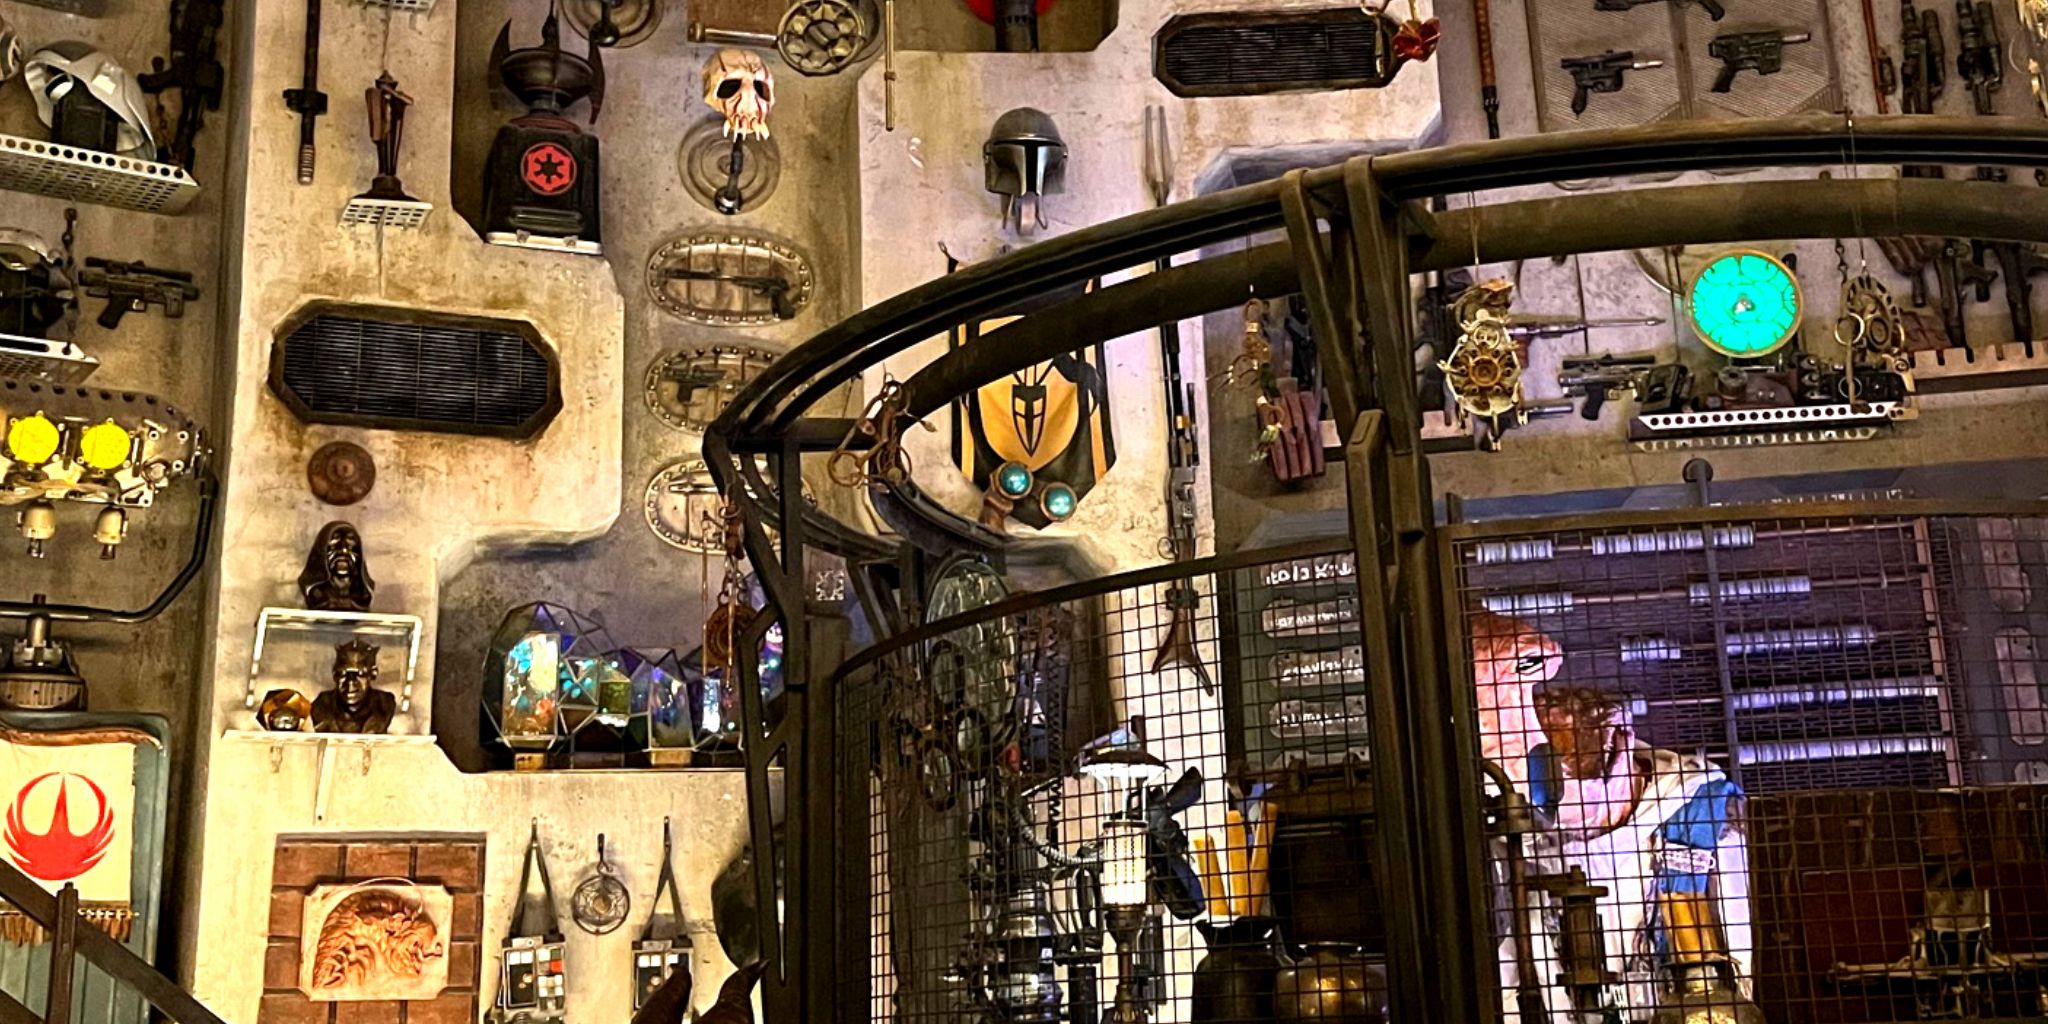 Dok Ondar's Den of Antiquities as featured at Star Wars: Galaxy's Edge on Batuu